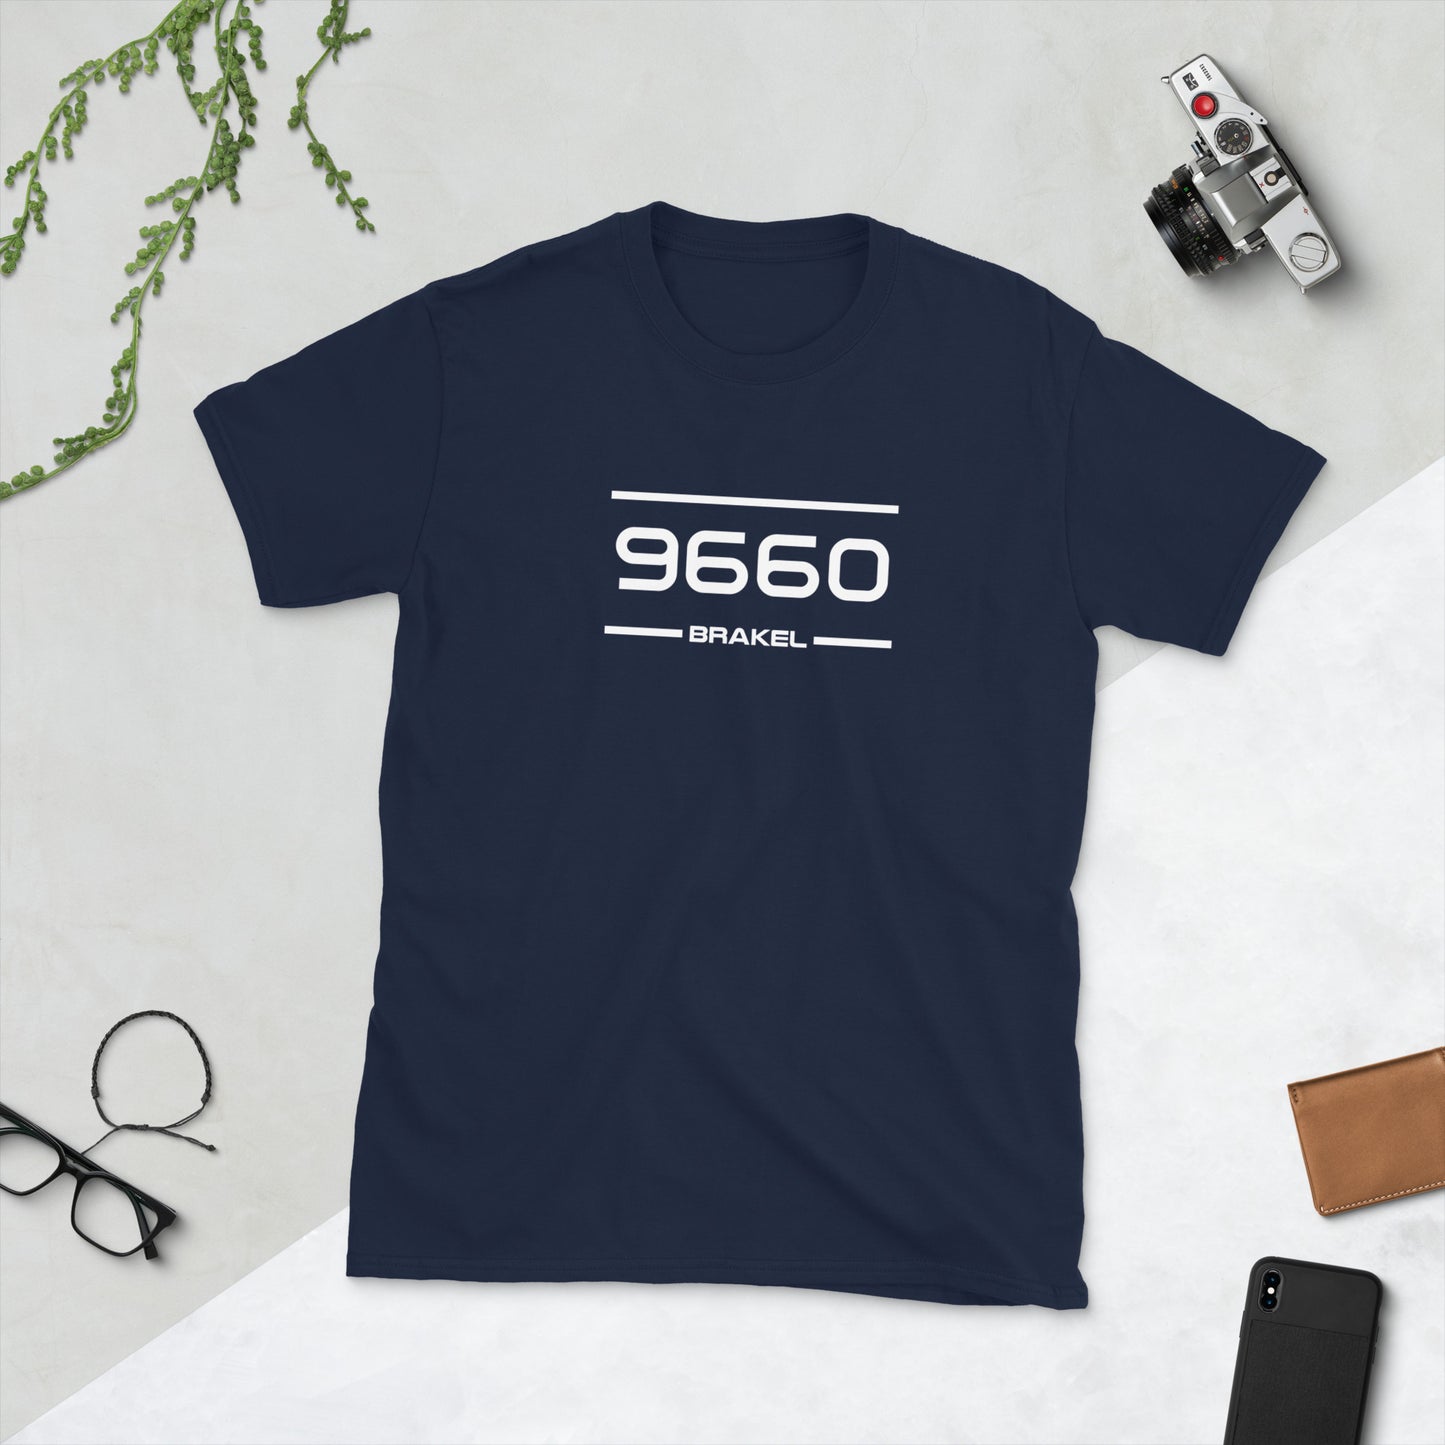 T-Shirt - 9660 - Brakel